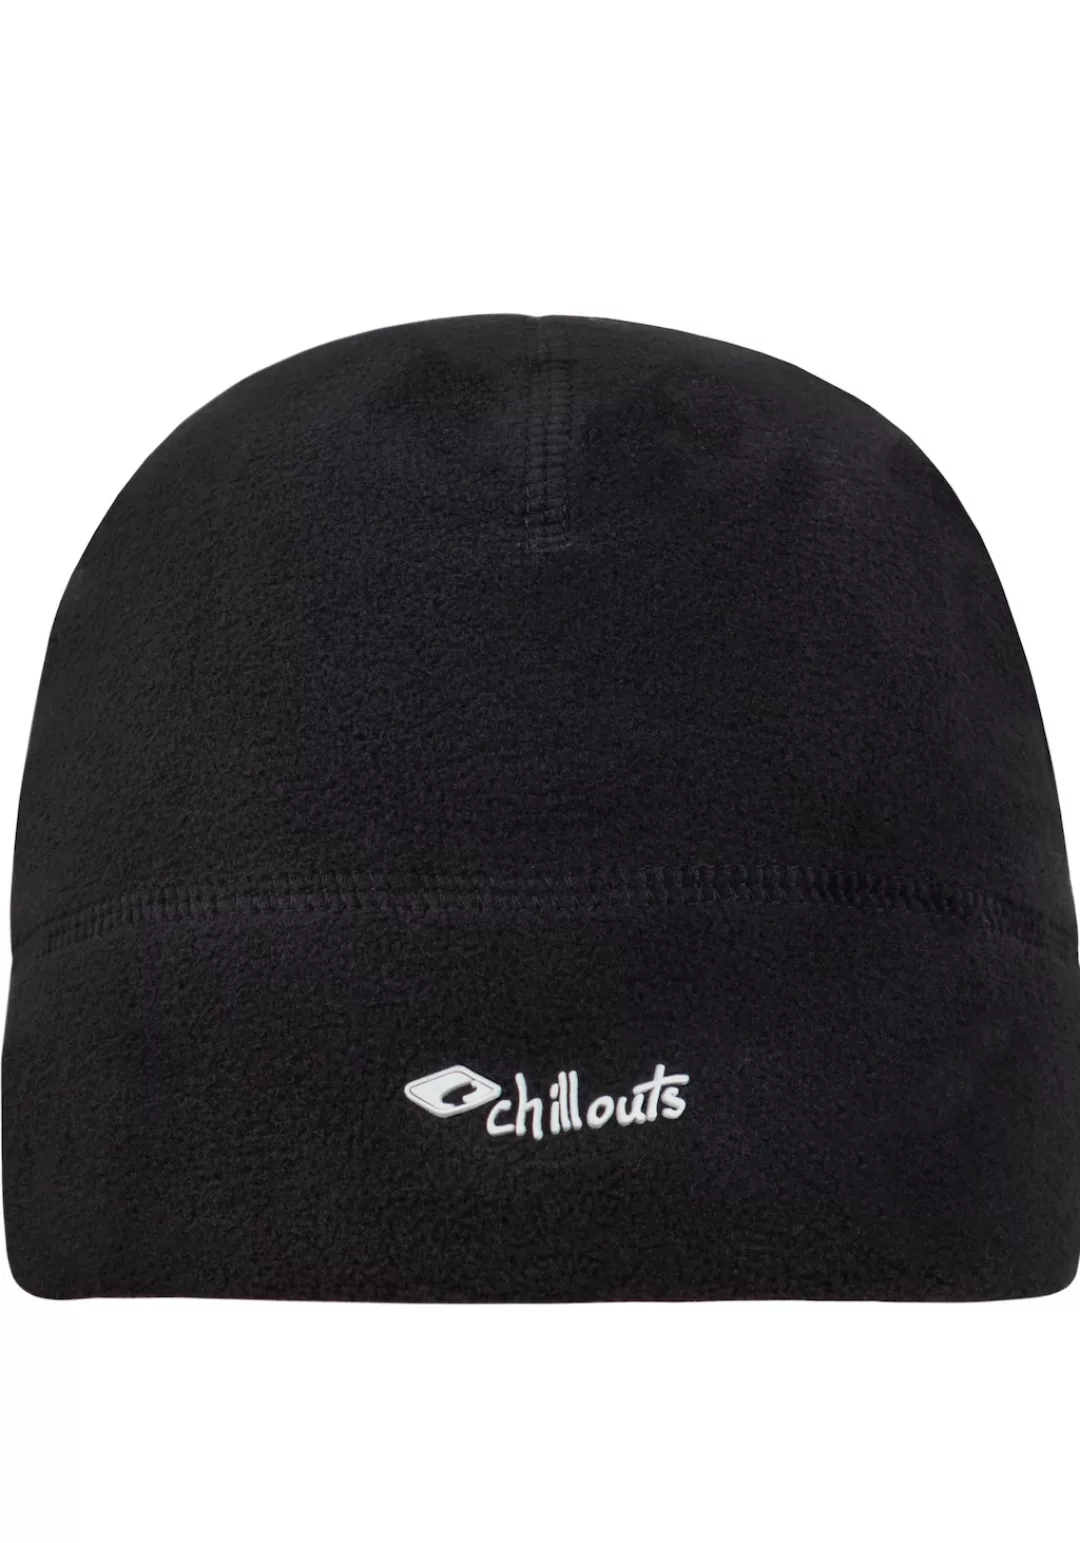 chillouts Fleecemütze "Freeze Fleece Hat" günstig online kaufen